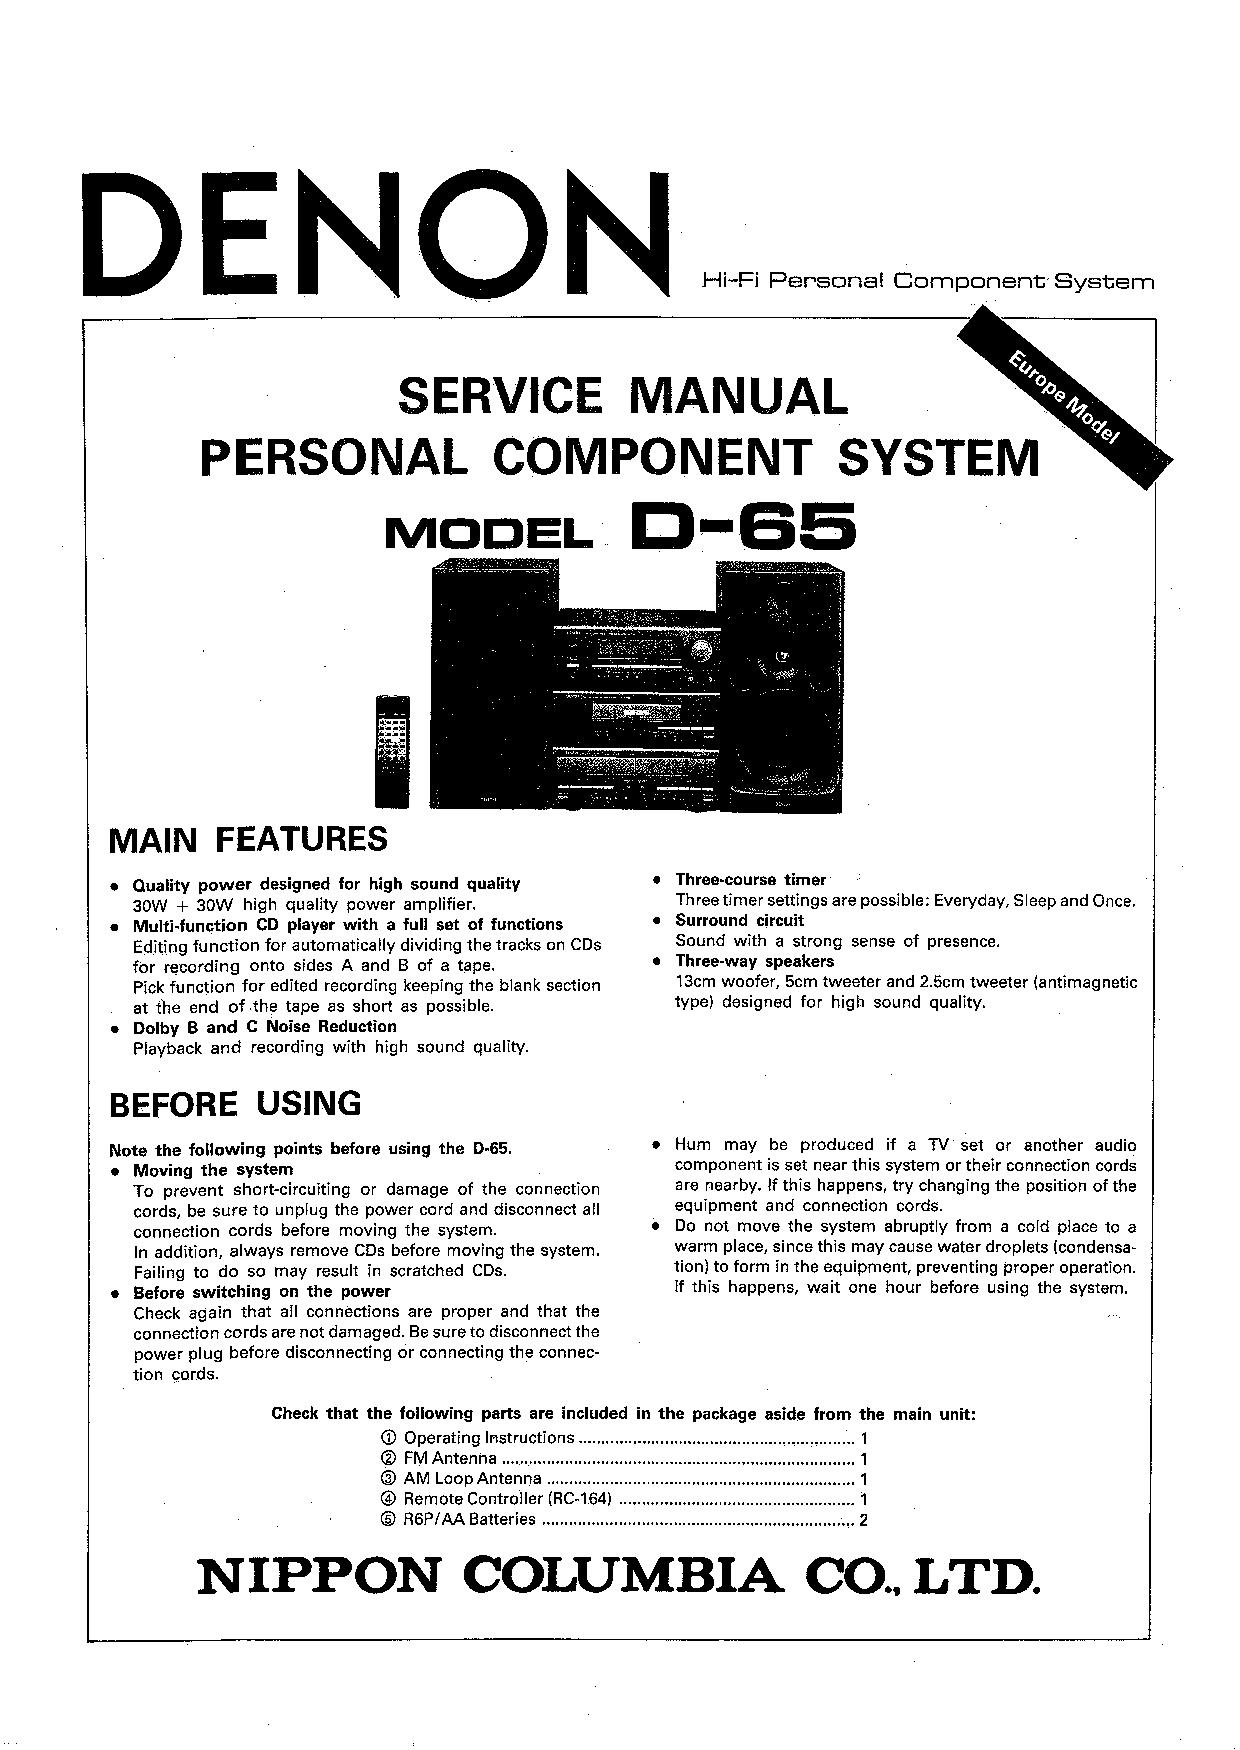 Denon D-65 Service Manual